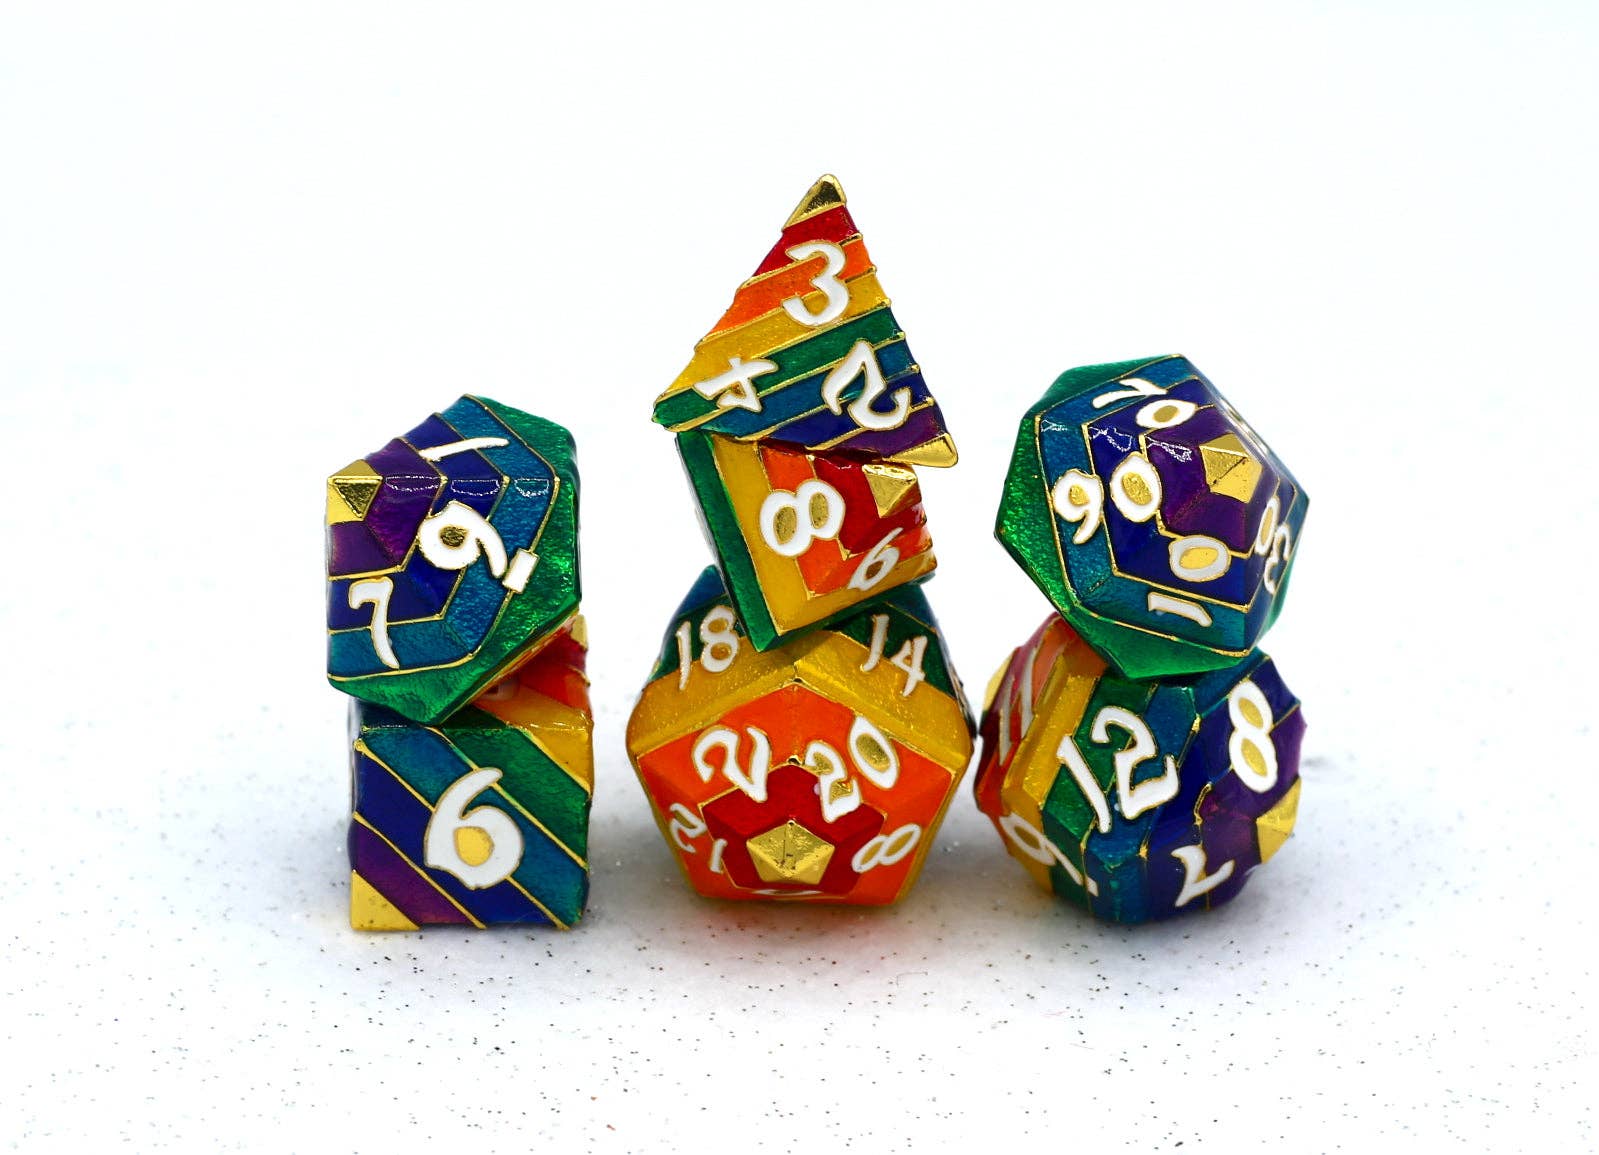 Hymgho Premium Dice - Rainbow Pride solid metal dice set - Gold with White